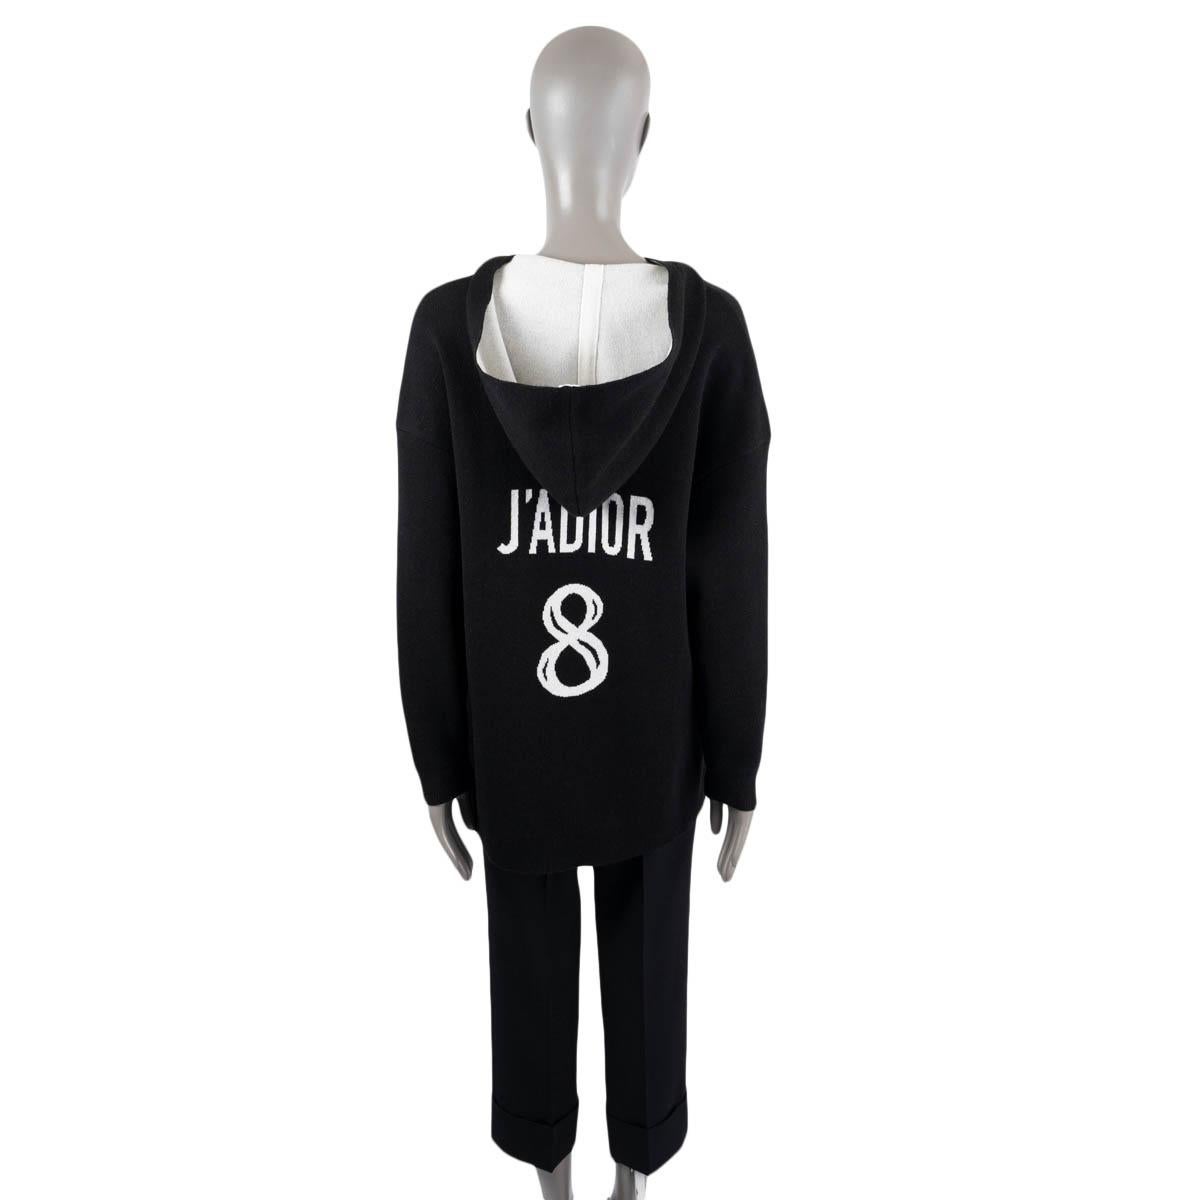 CHRISTIAN DIOR black cashmere J'ADIOR 8 HOODED Sweater 40 M For Sale 5